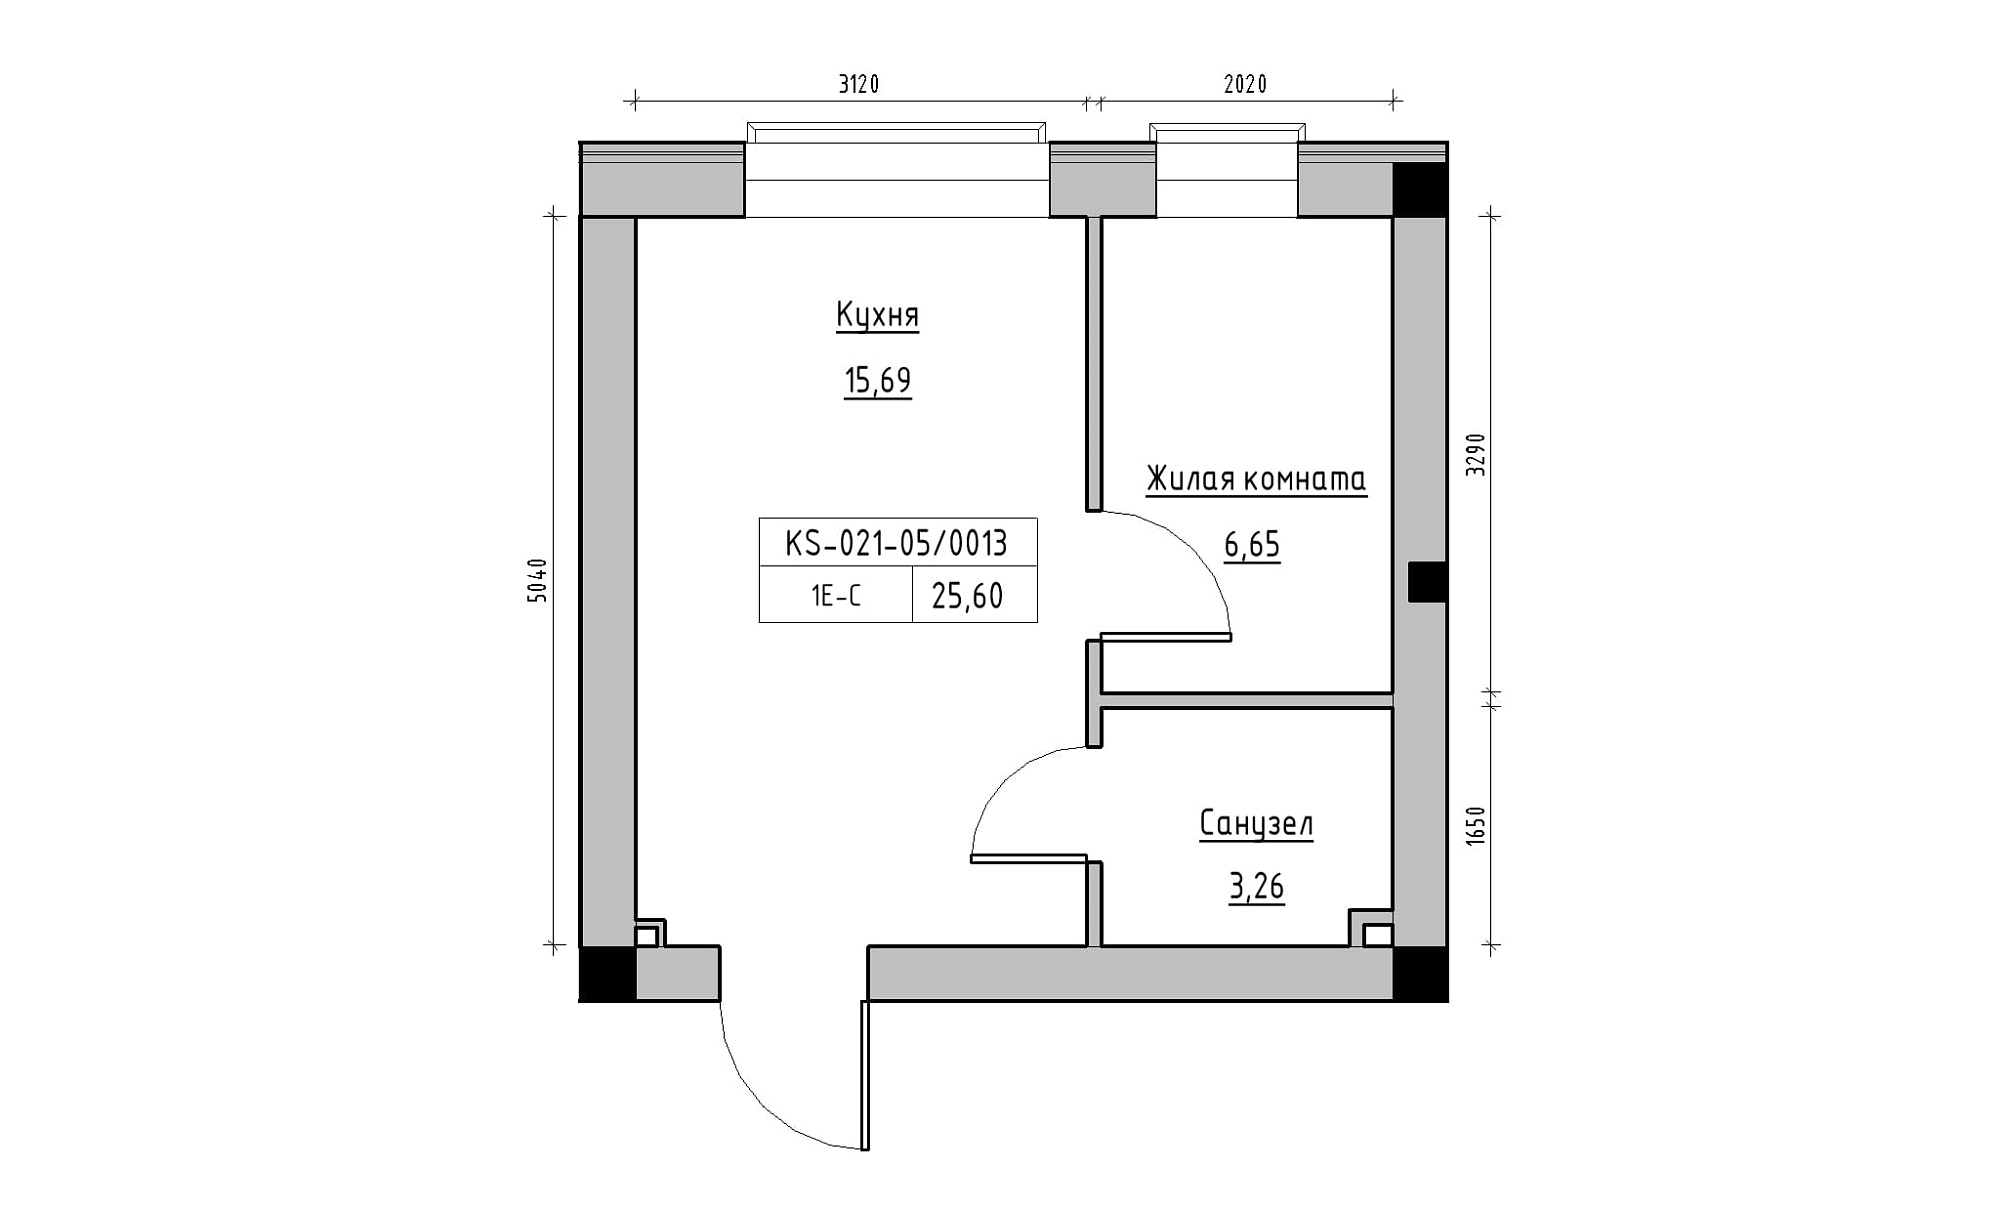 Planning 1-rm flats area 25.6m2, KS-021-05/0013.